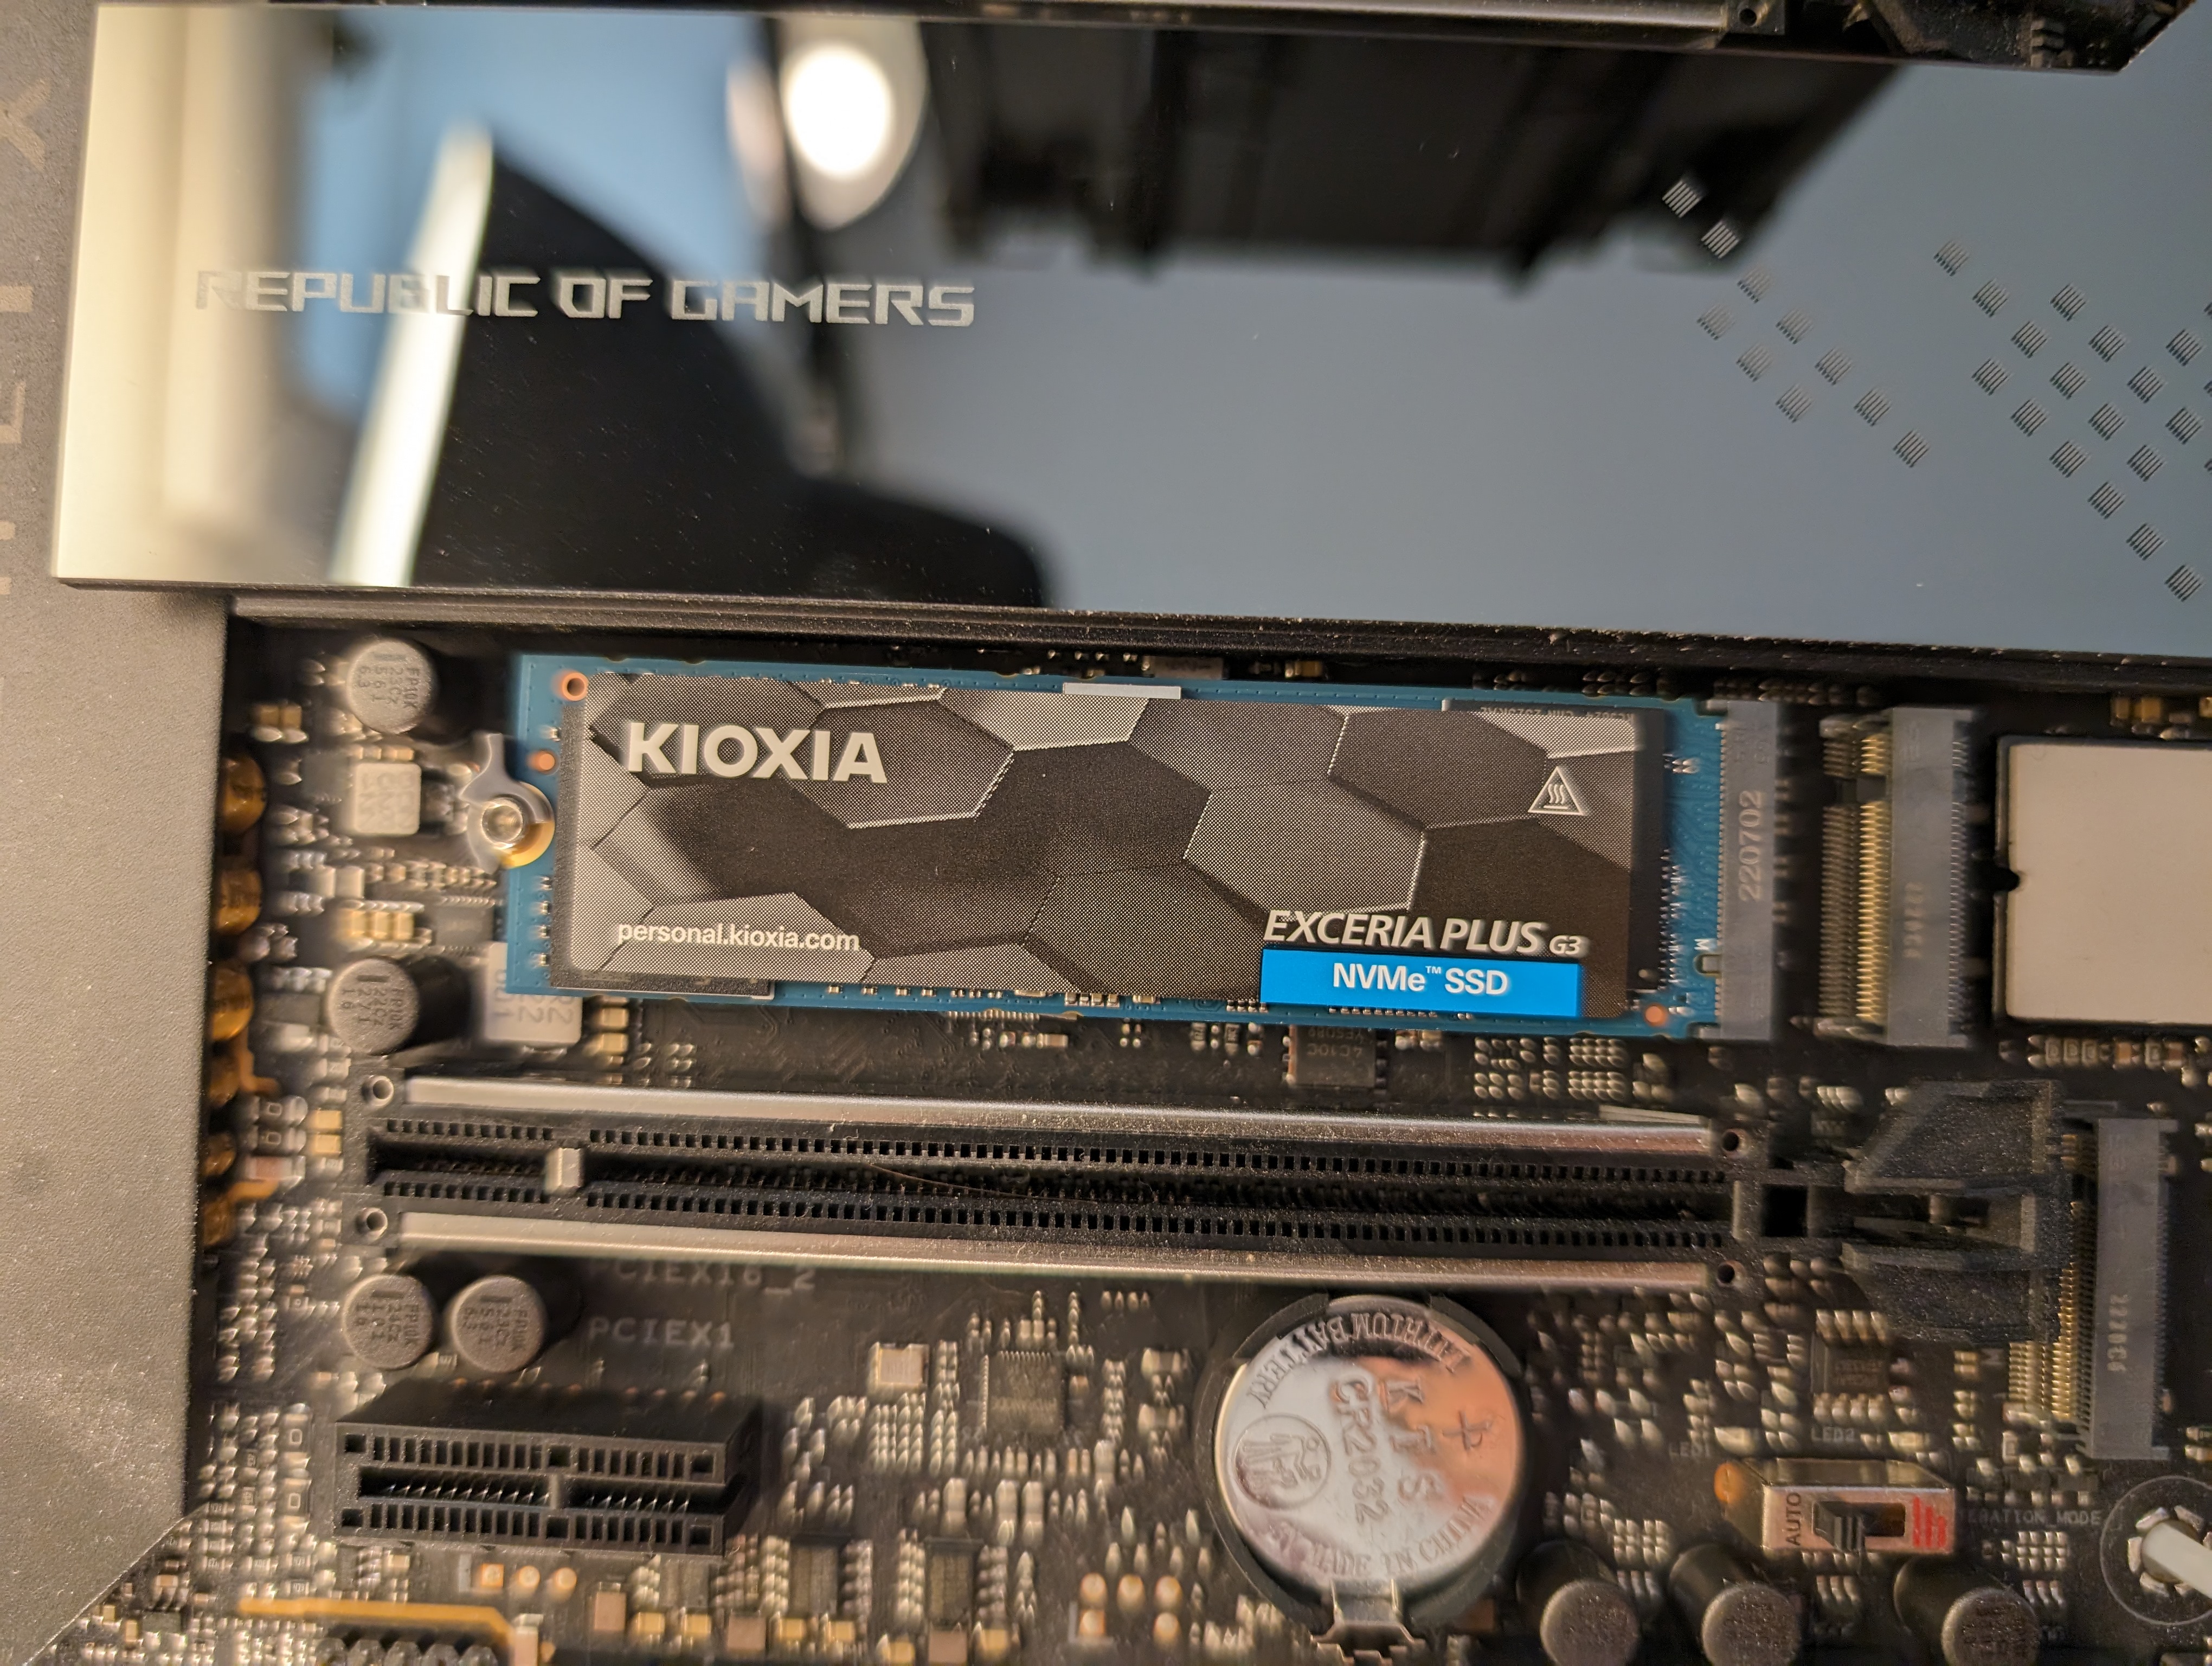 Kioxia Exceria Plus G3 in test rig AMD based.jpg